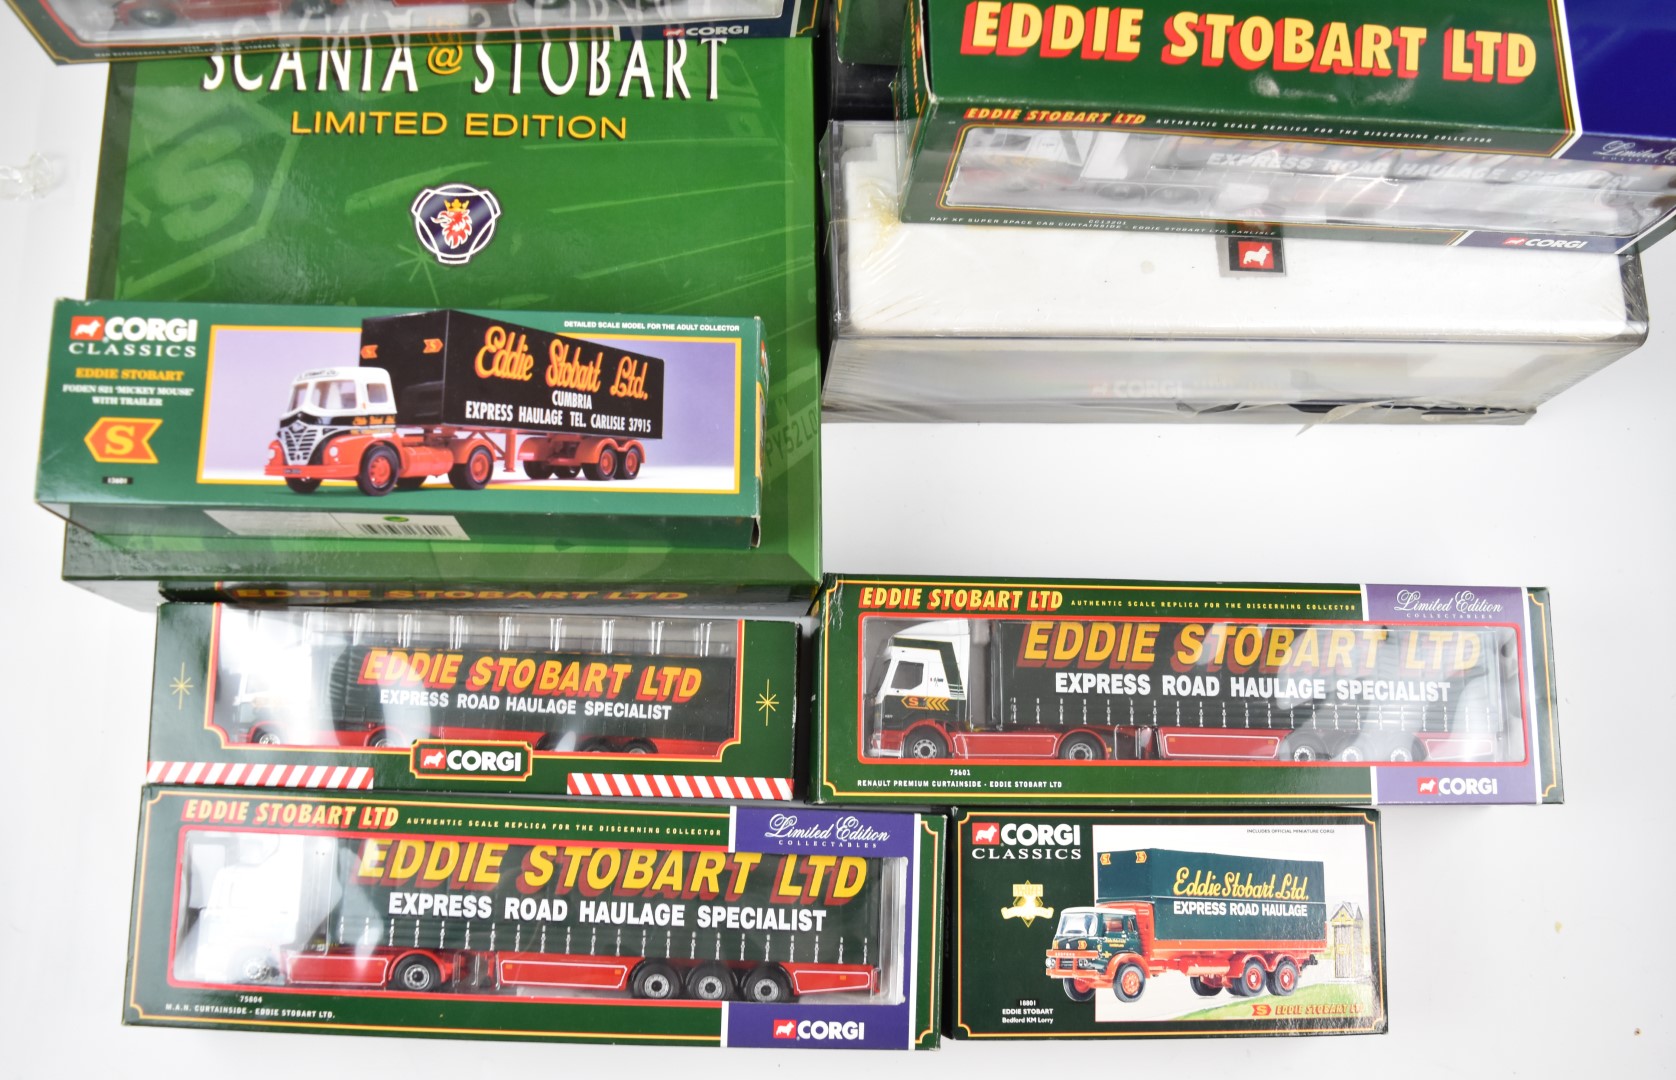 Eighteen Corgi 1:50 scale Eddie Stobart Ltd diecast model haulage vehicles to include Scania@Stobart - Image 3 of 6